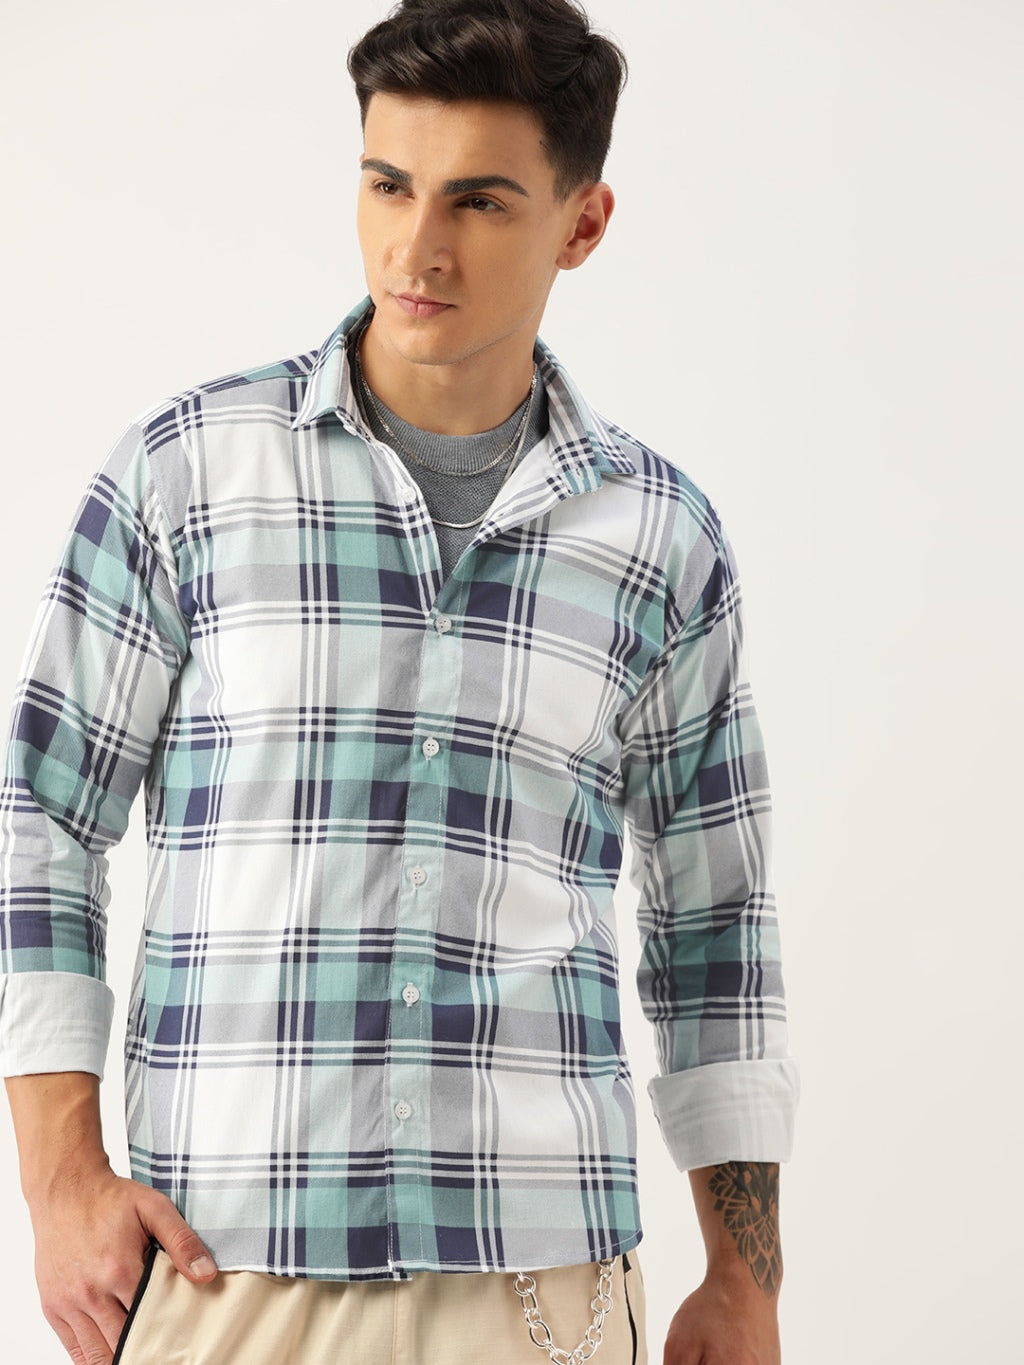 Luxrio Men's Checkered Full Sleeves Casual Shirt Green